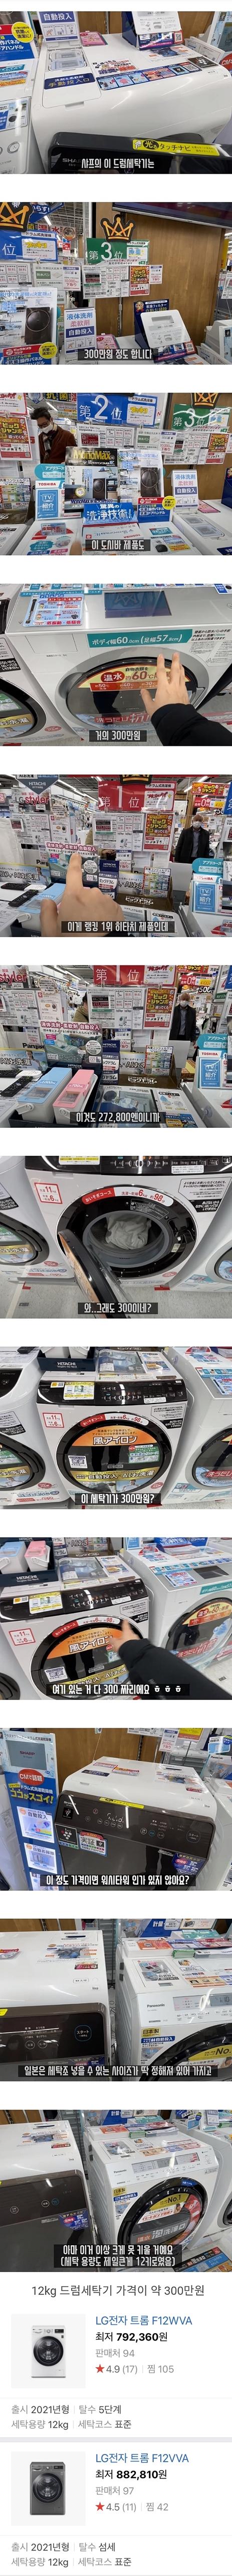 Latest washing machine price in Japan